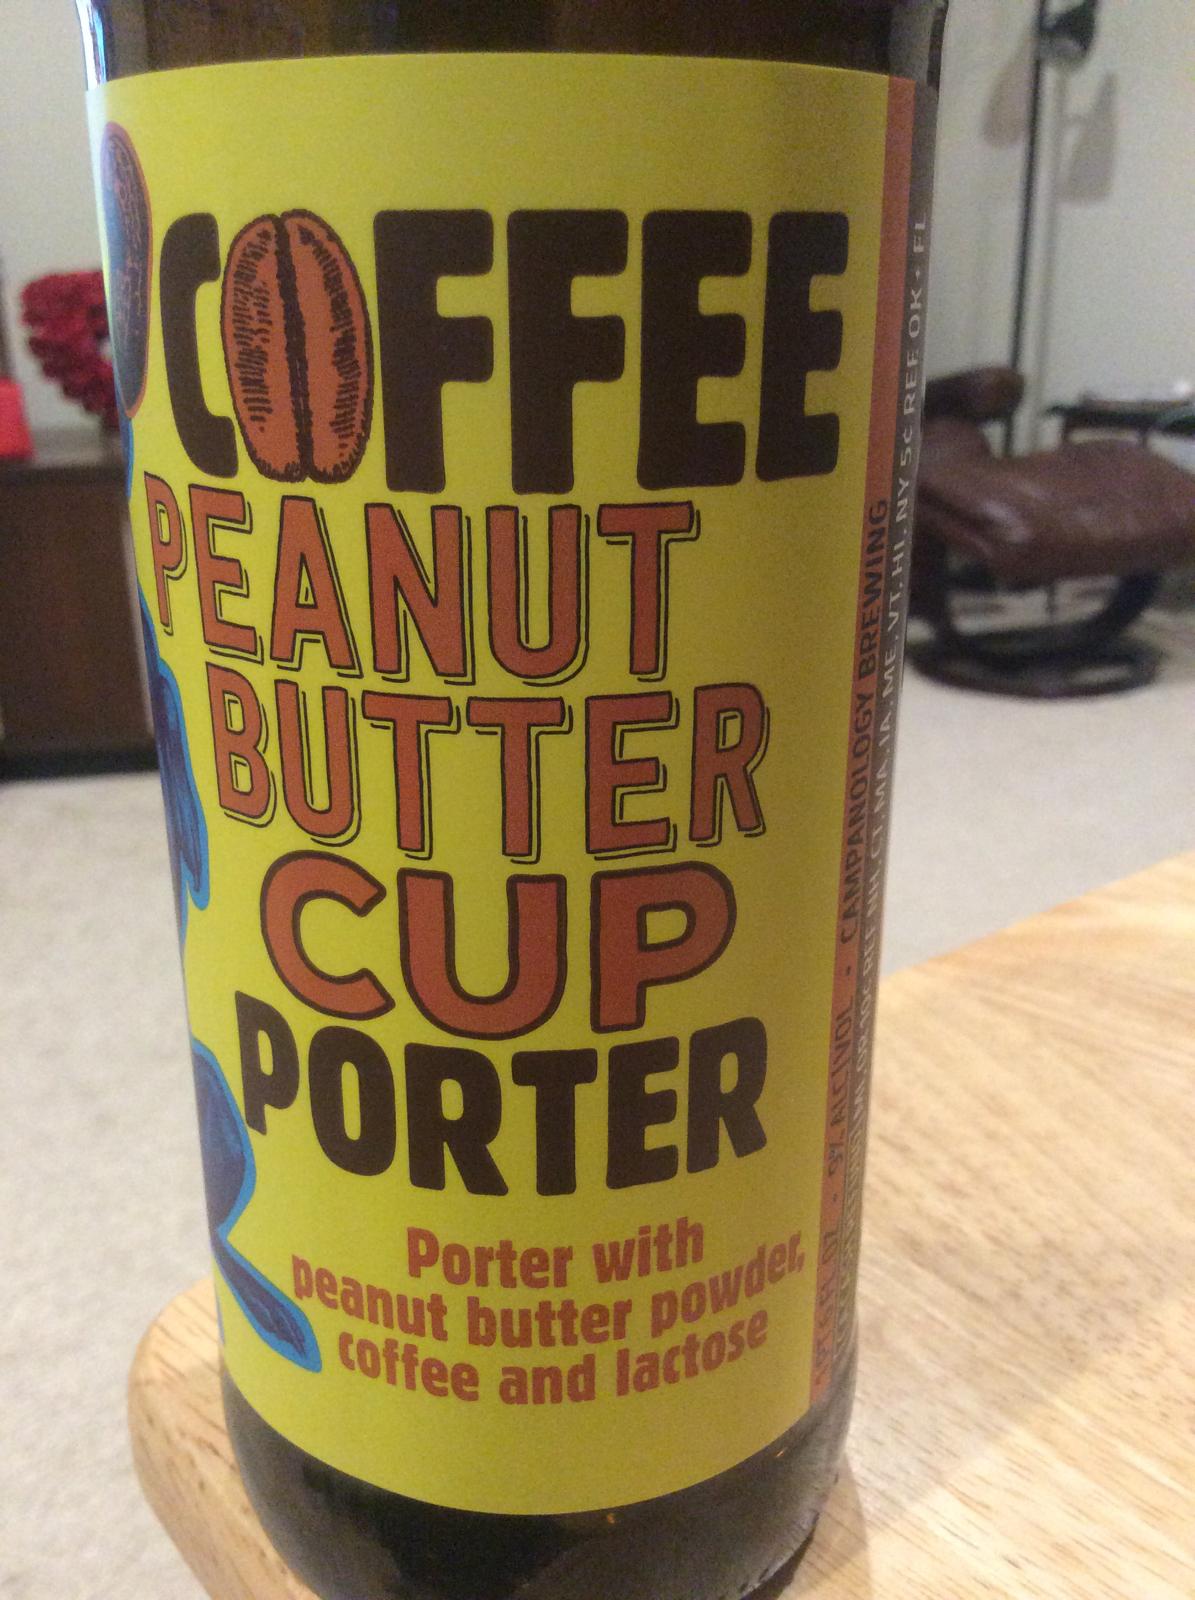 DUPLICATE - Coffee Peanut Butter Cup Porter